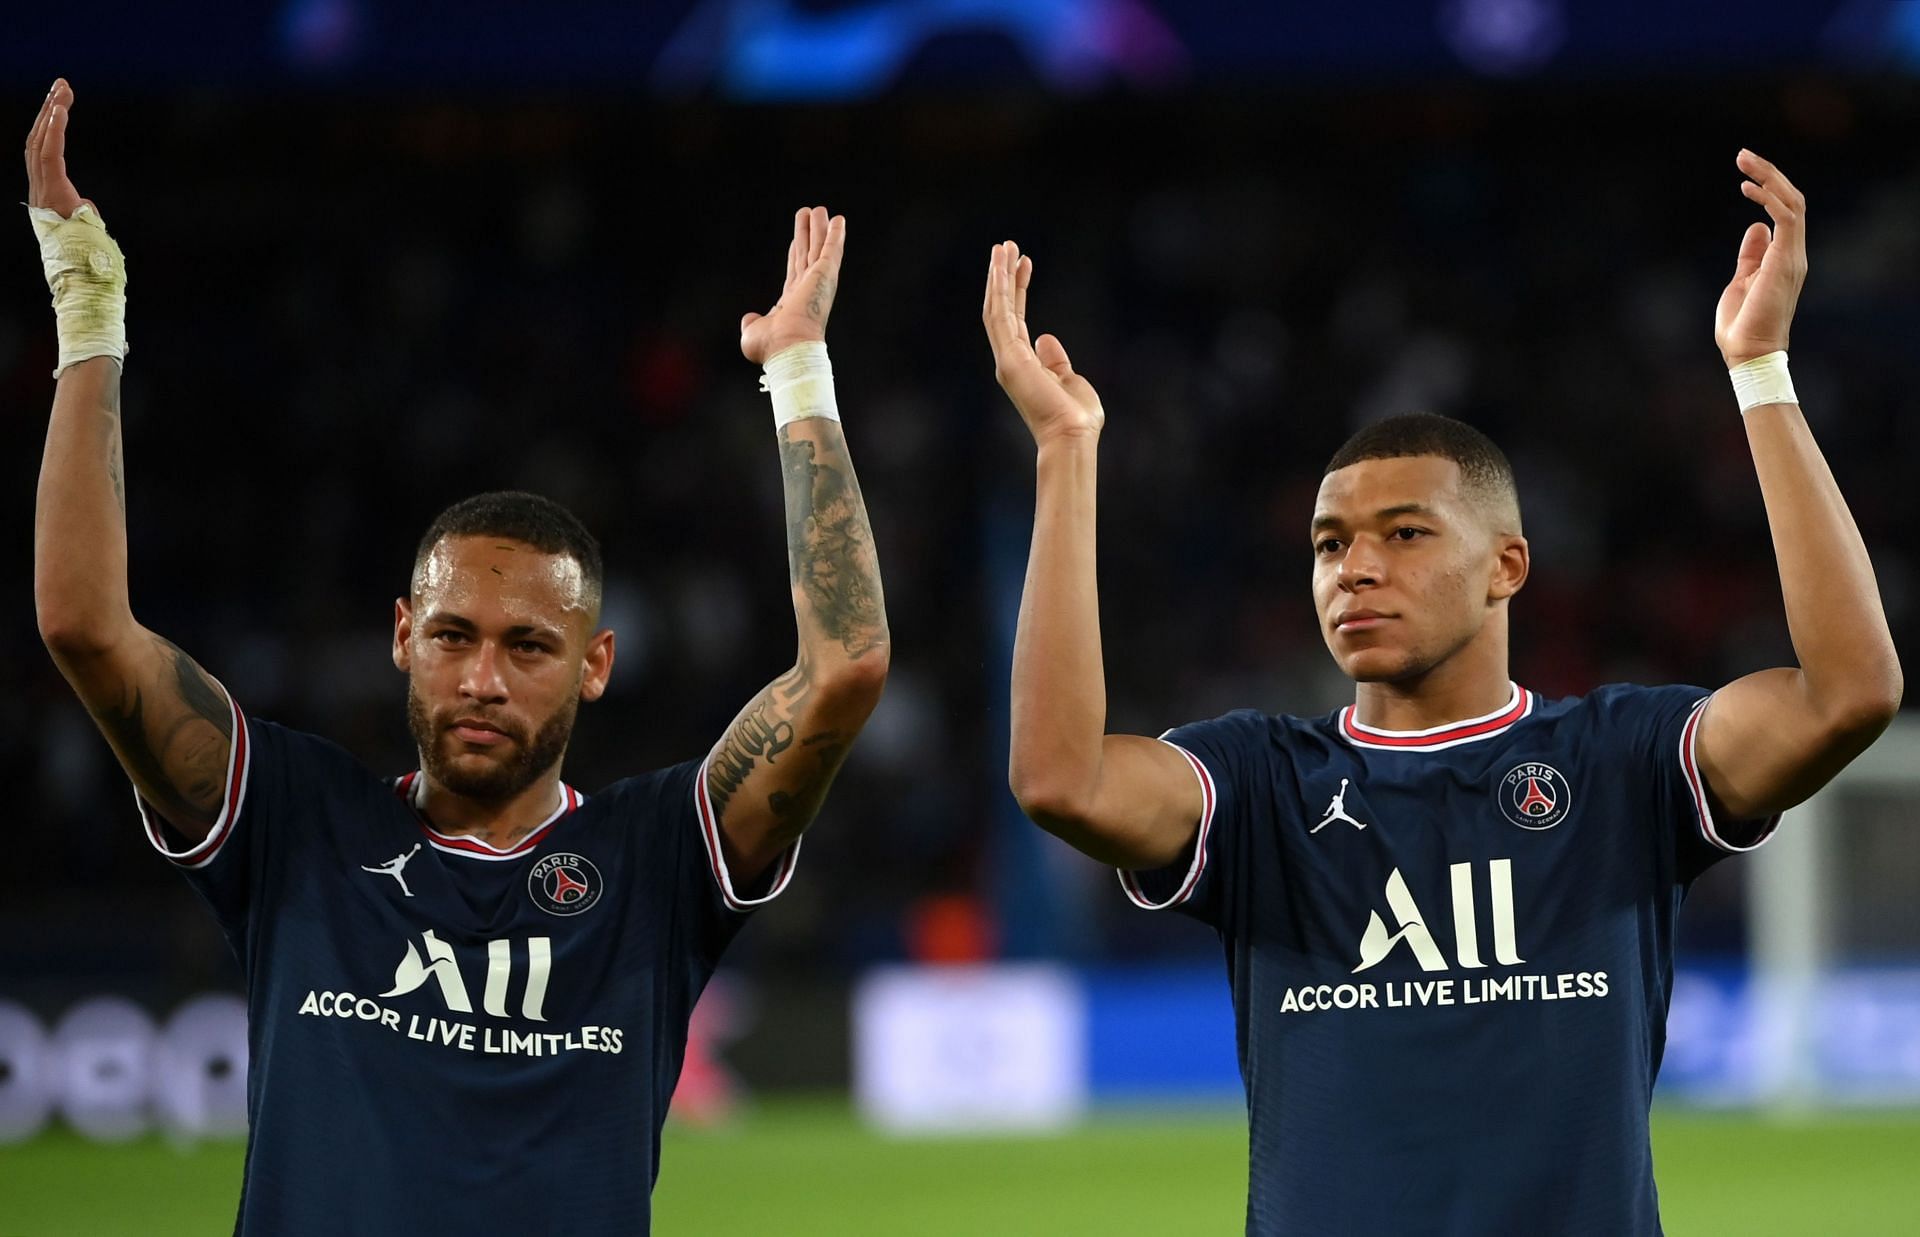 PSG forwards Neymar Jr. and Kylian Mbappe